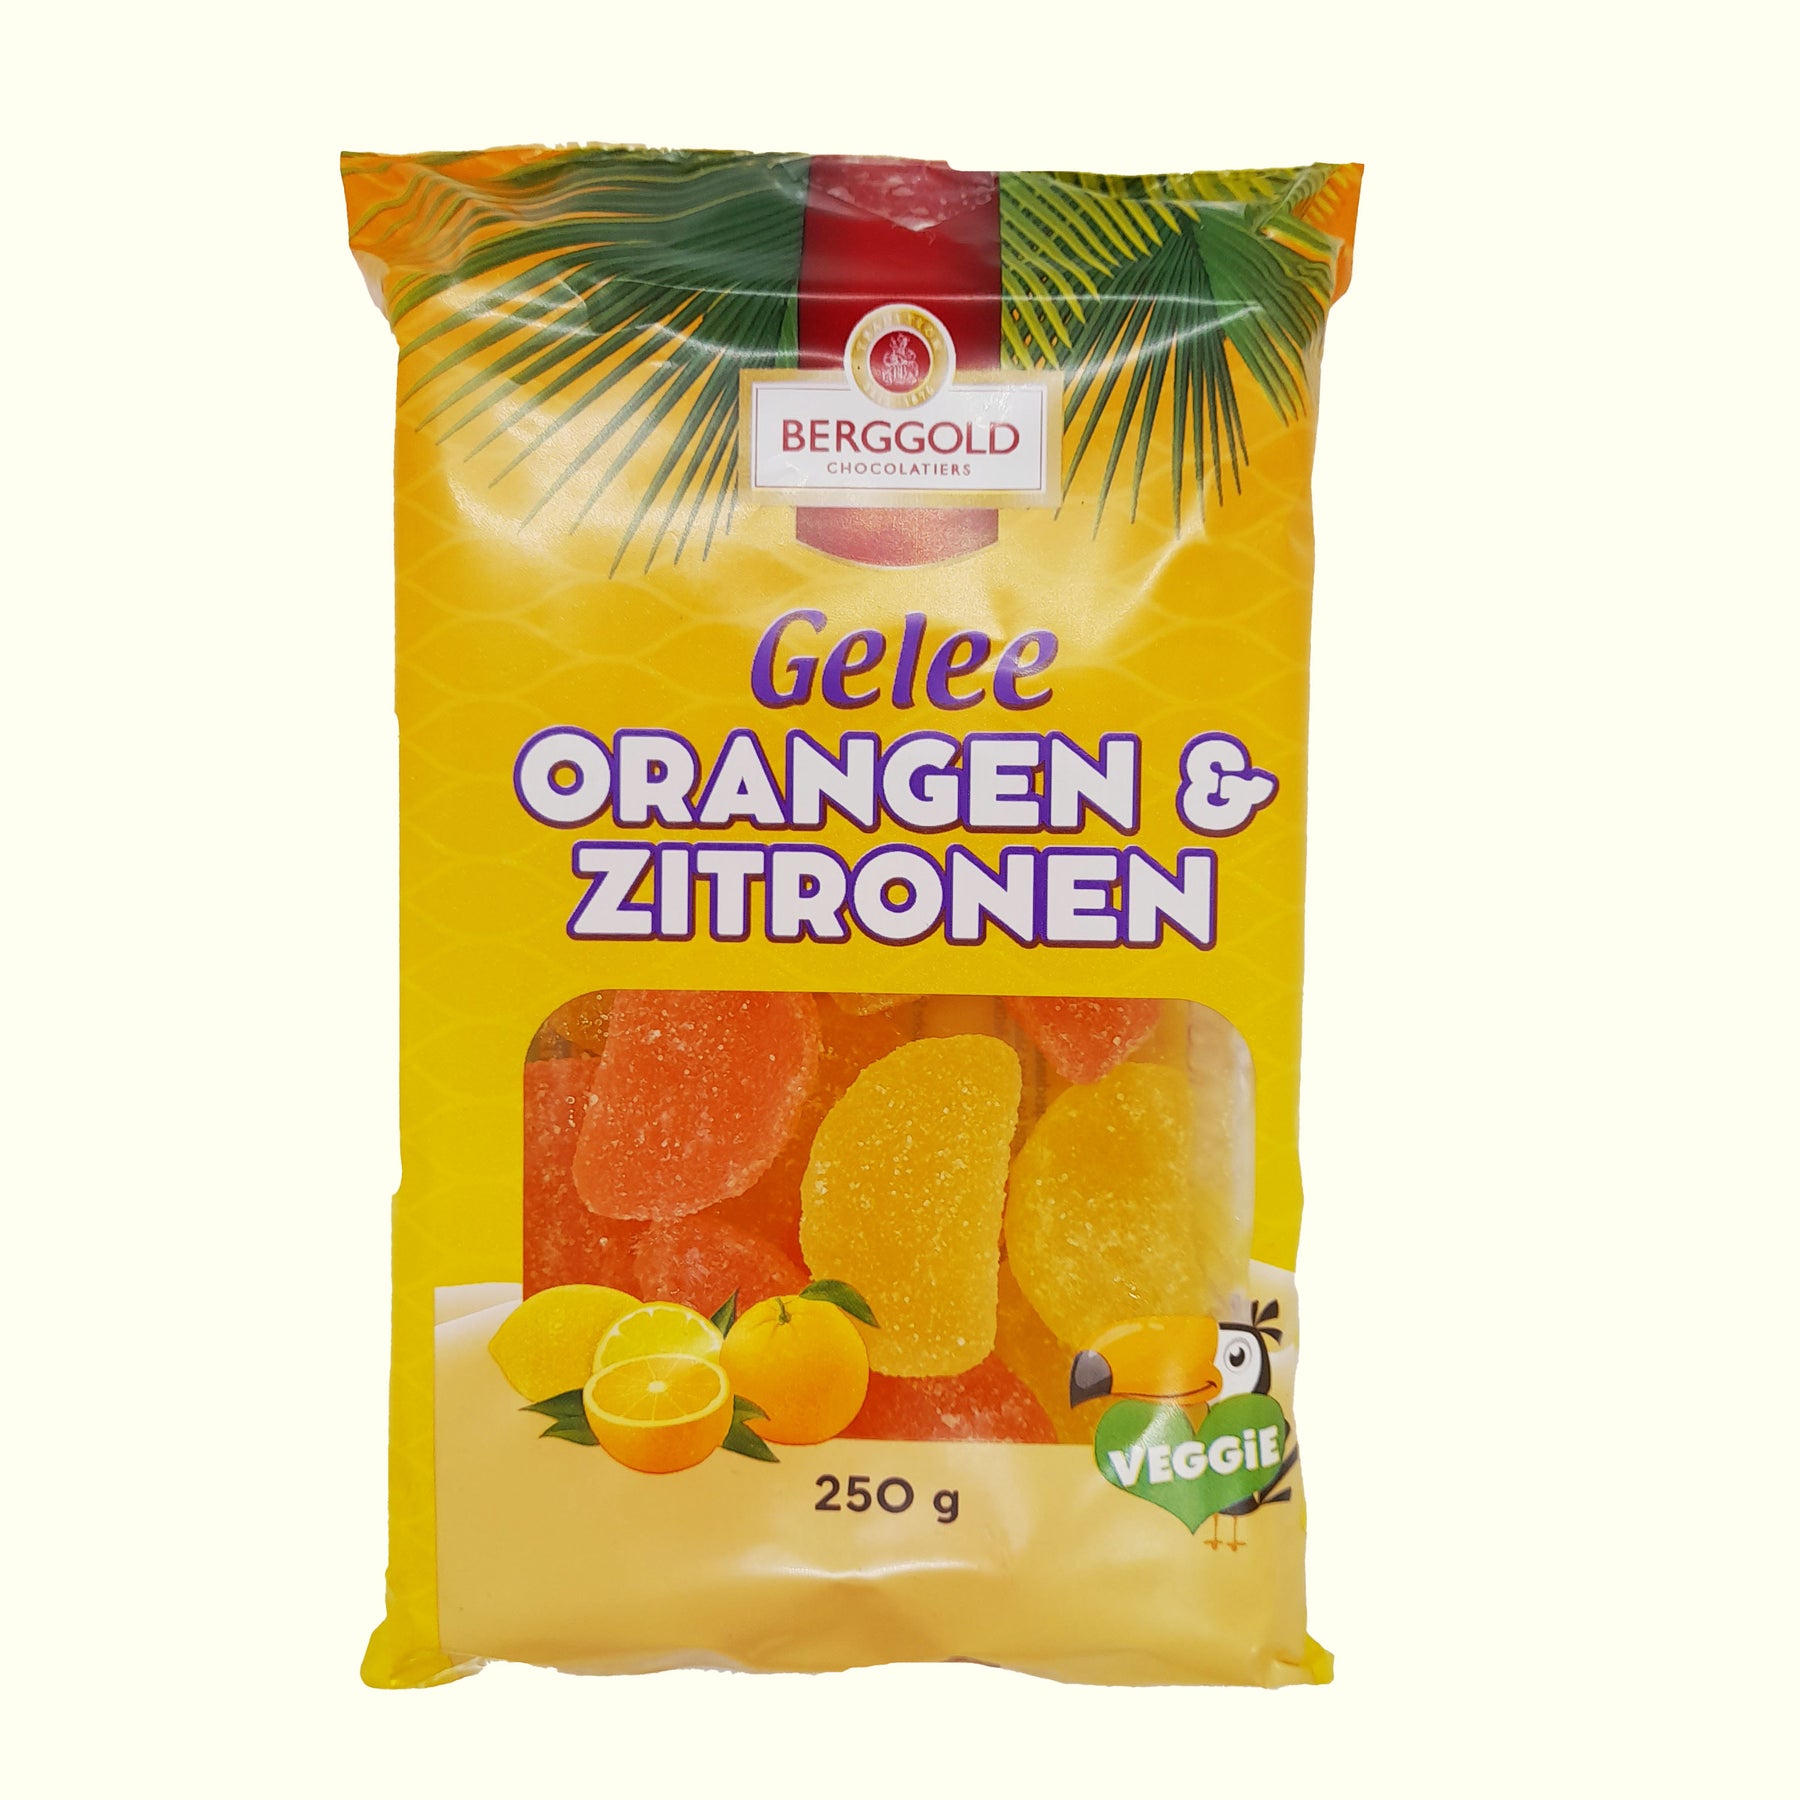 Berggold Gelee Orangen & Zitronen Glutenfrei 250g